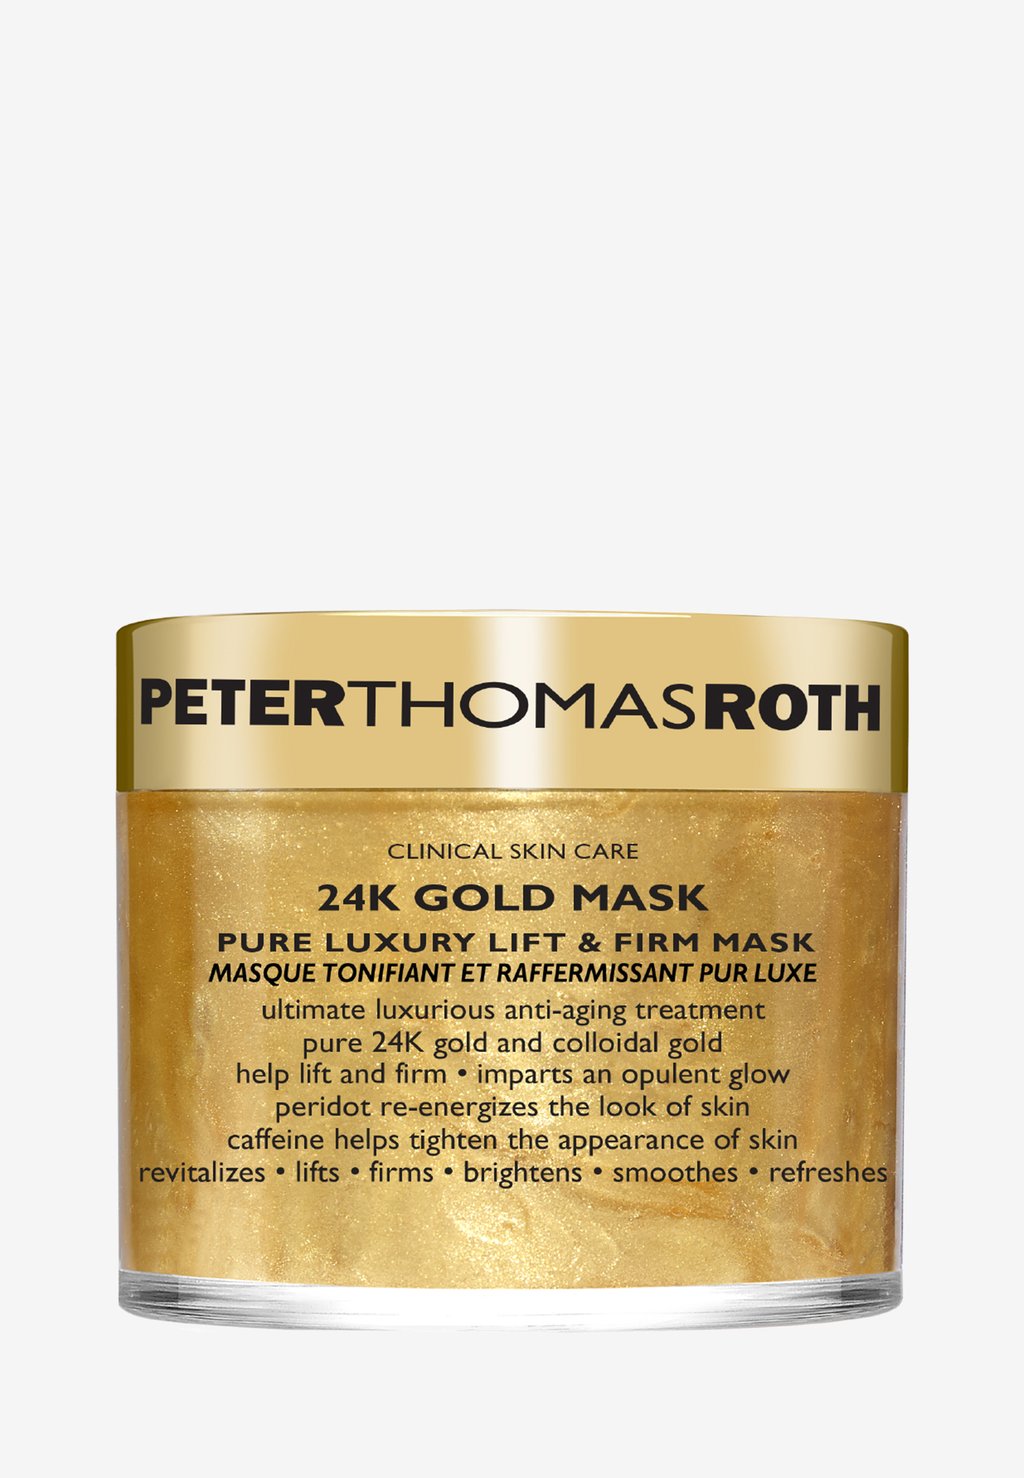 Маска для лица 24K Gold Mask Peter Thomas Roth peter thomas roth pampkin enzyme mask